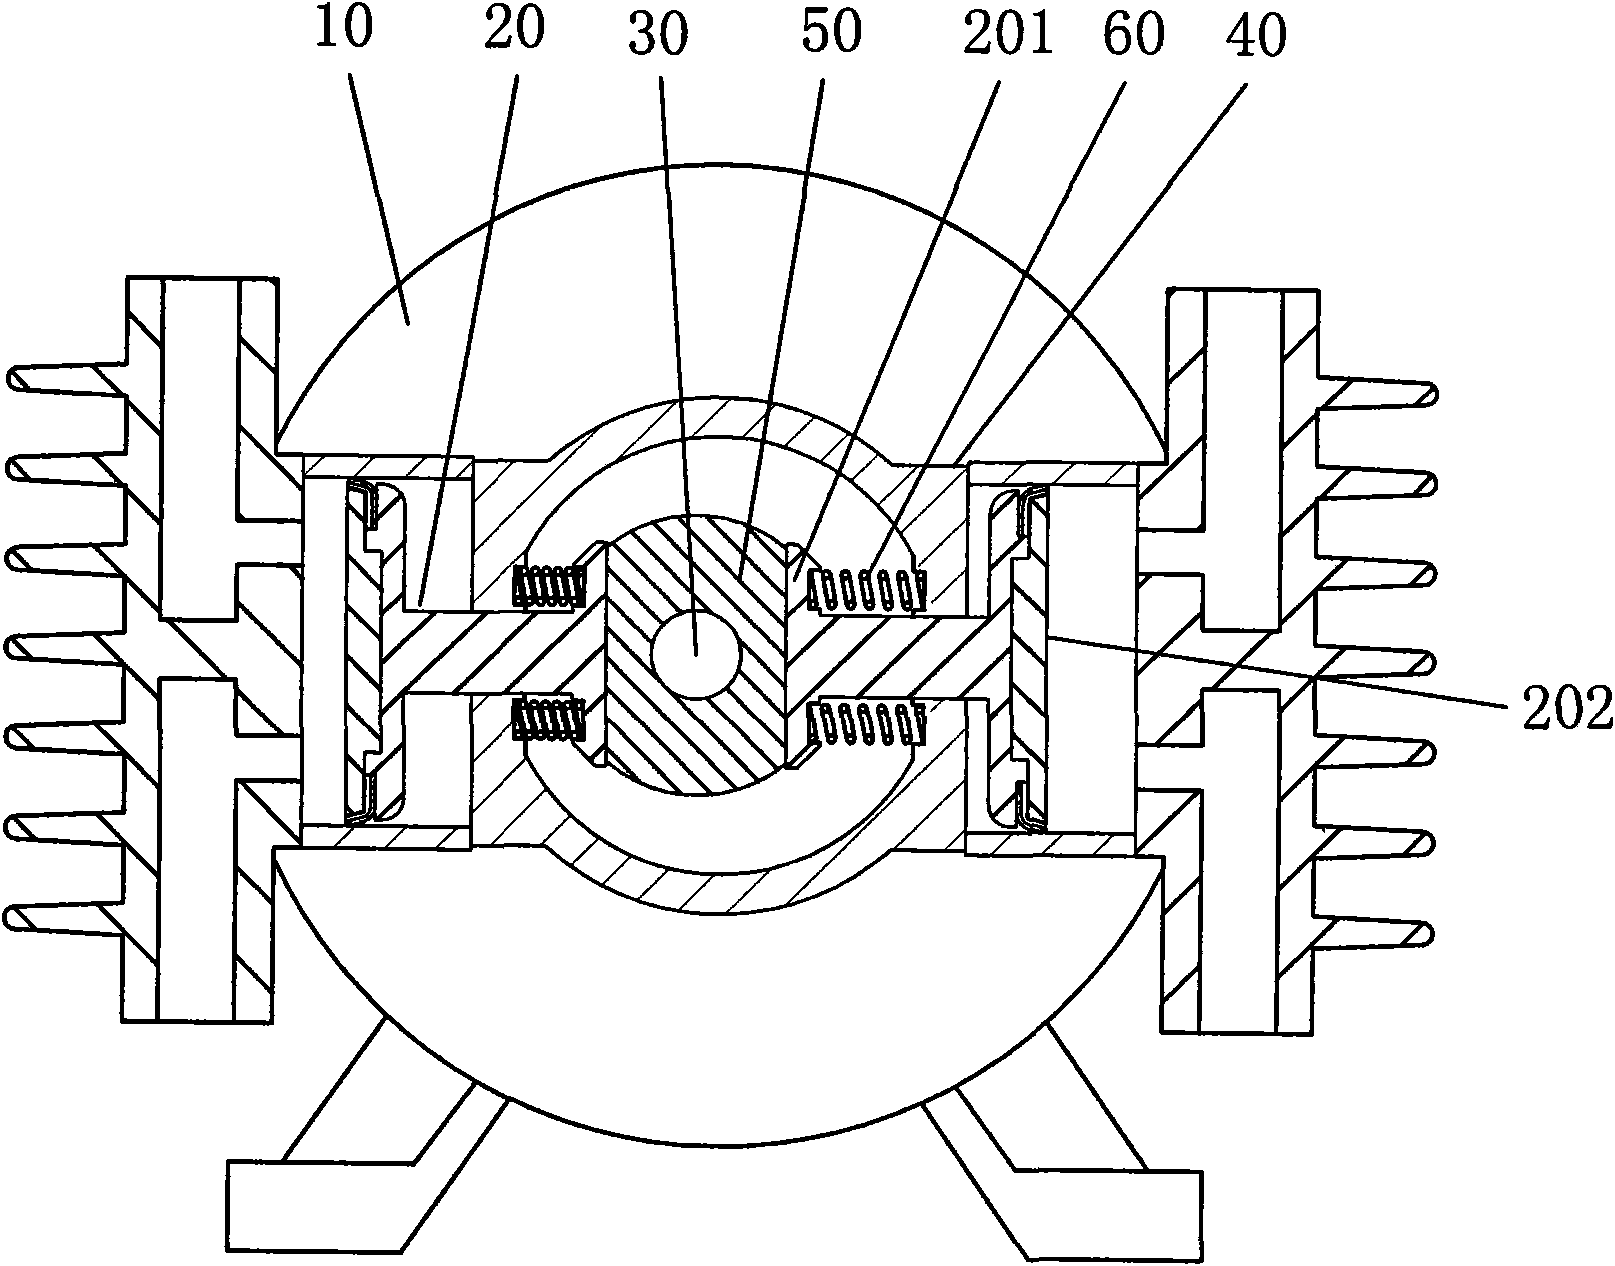 Straight-line reciprocating piston type compressor